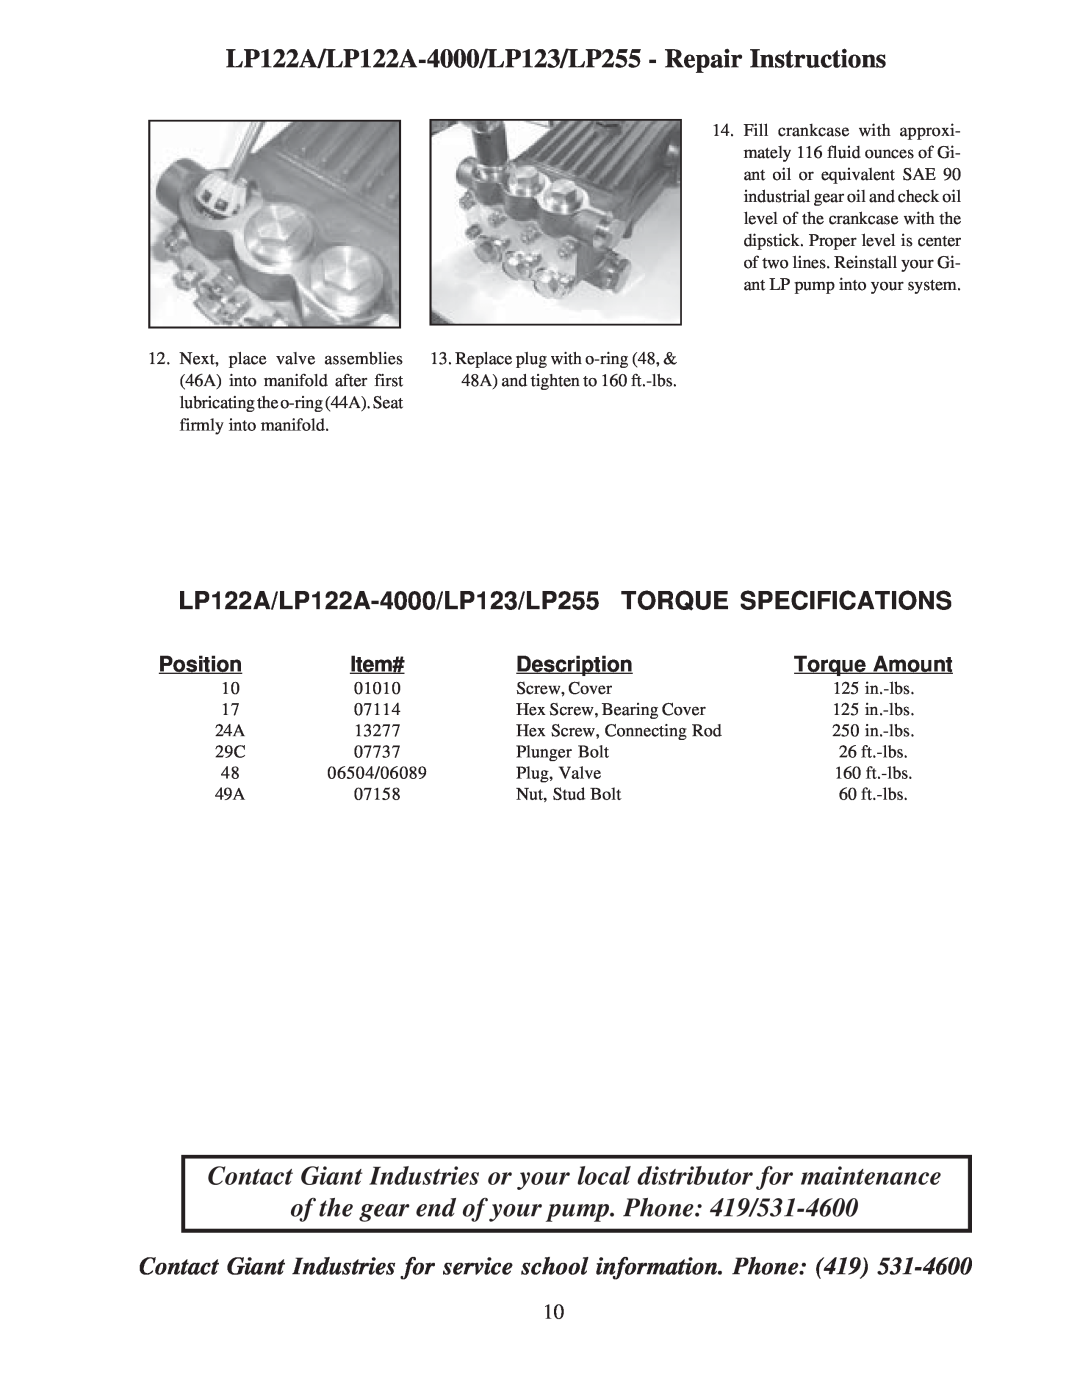 Giant LP122A Position, Item#, Description, Torque Amount, of the gear end of your pump. Phone 419/531-4600 